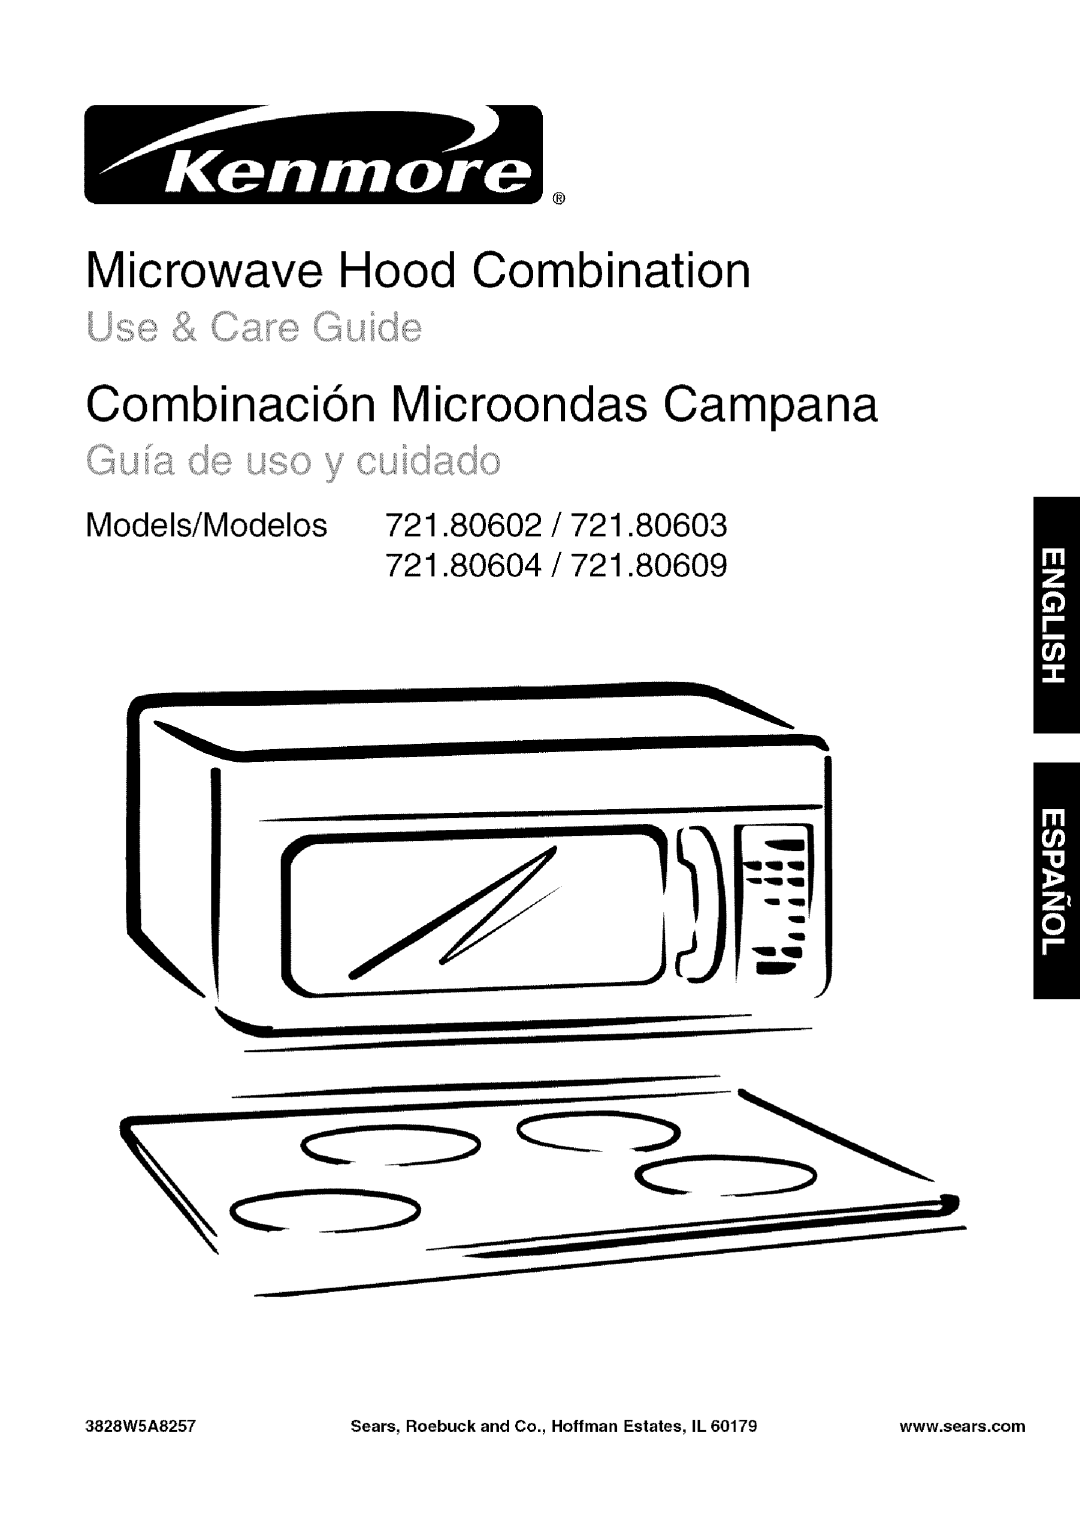 Kenmore 721.80602, 721.80603, 721.80609 manual Microwave Hood Combination, Combinaci6n Microondas Campana, ModelslModelos 